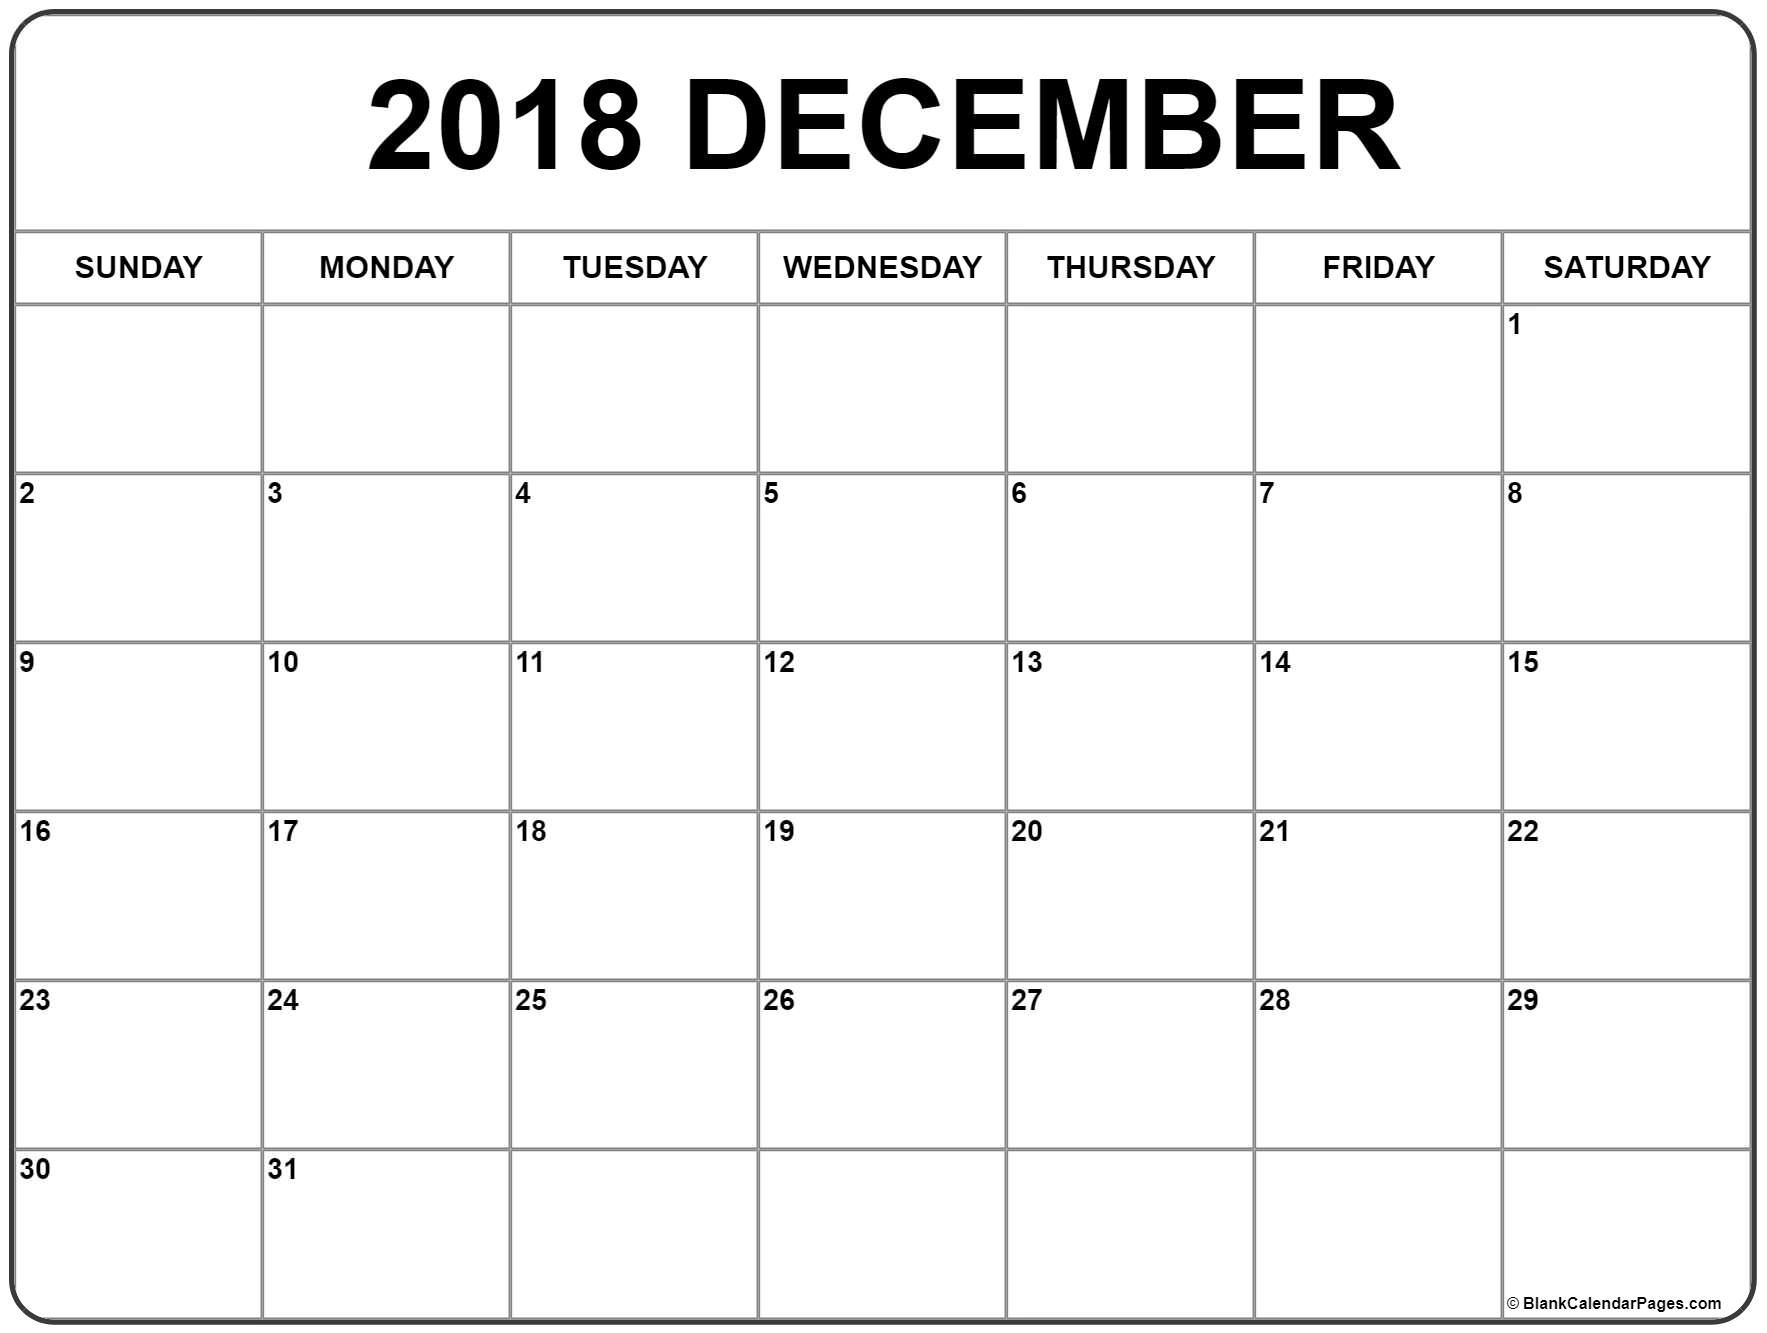 December 2018 Calendar . December 2018 Calendar